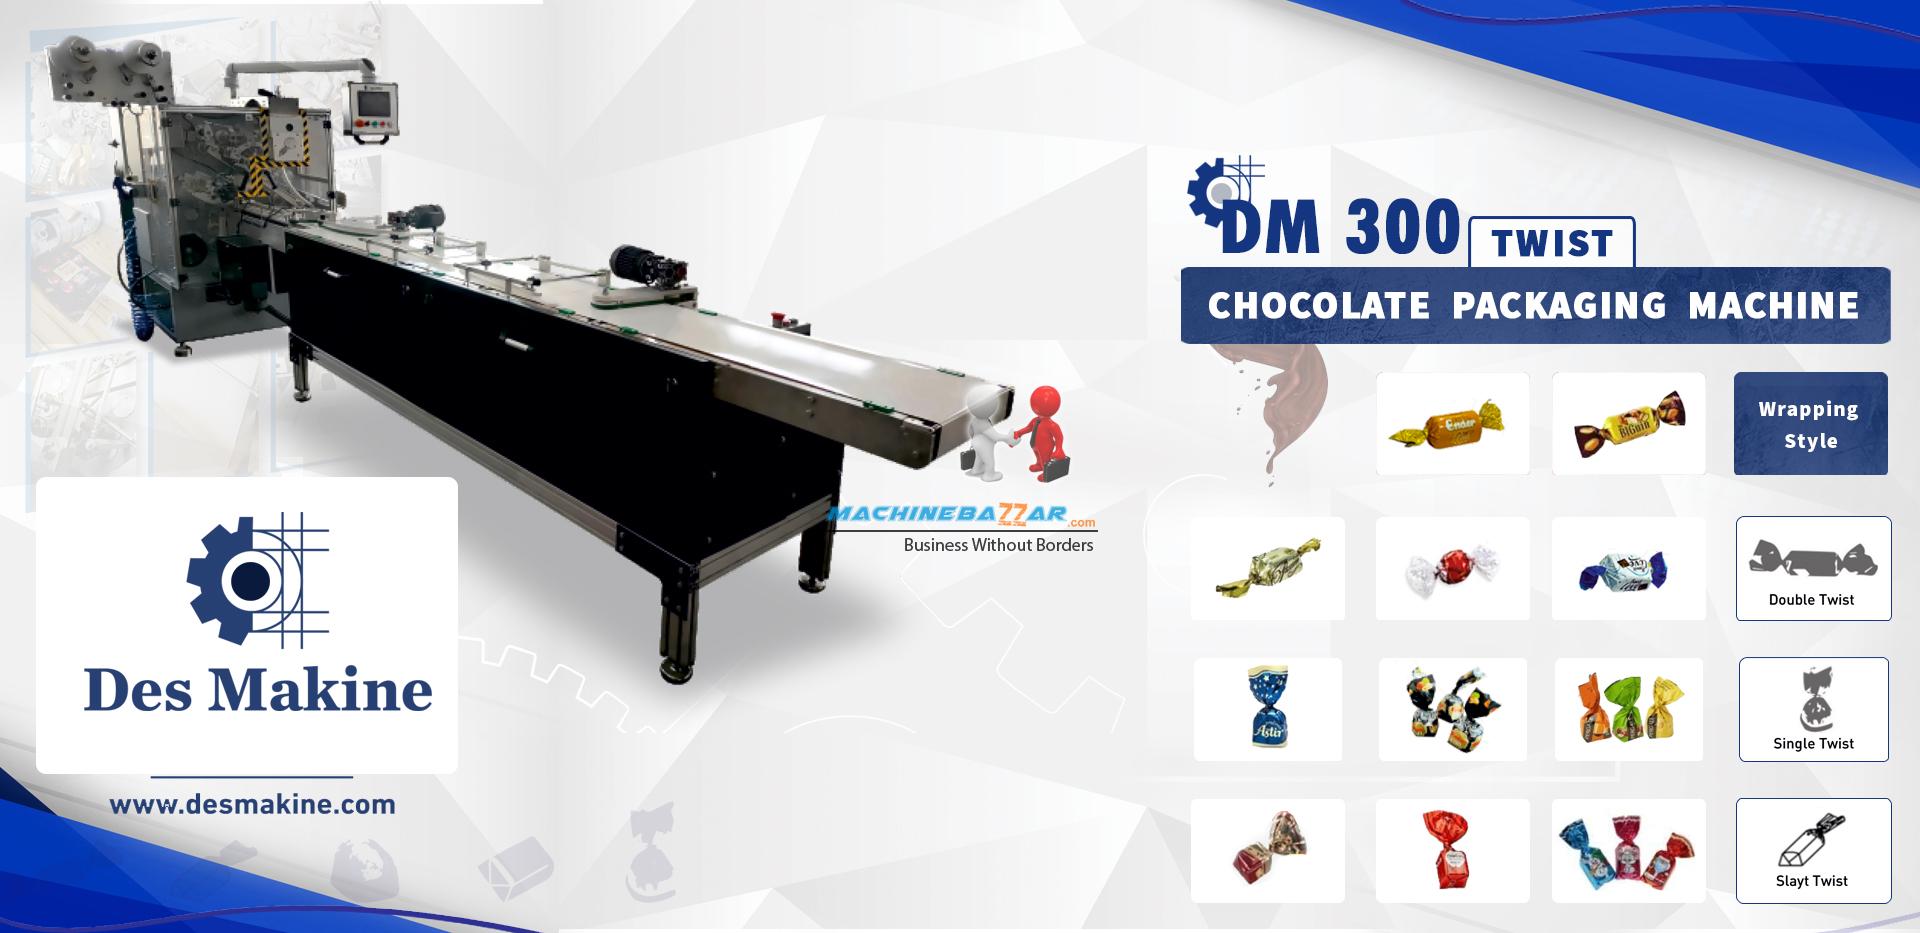 Chocolate Packaging Machine - DM300 twist